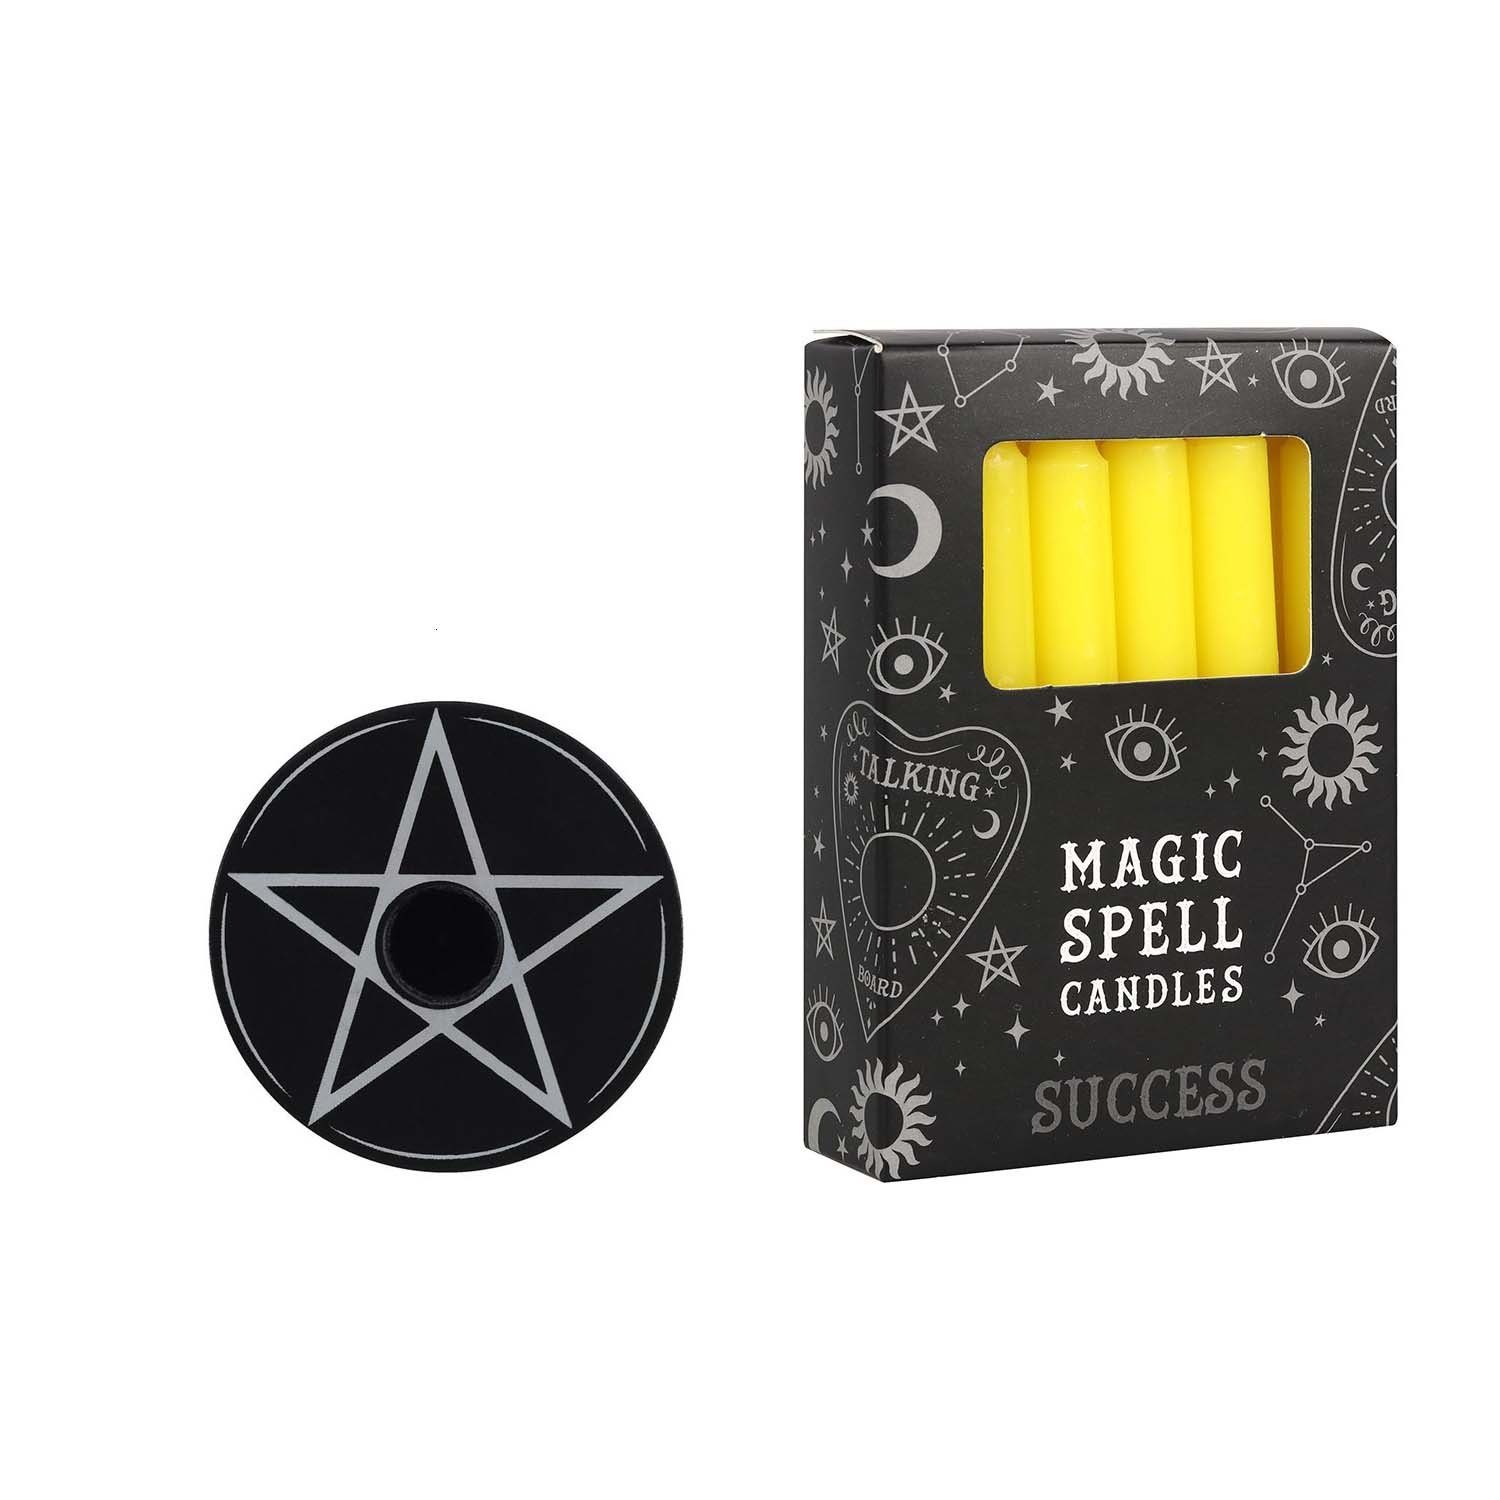 Hexe, Candler Black Wunschkerzen, "Pentagram" MystiCalls Spell Halter - Success Witchcraft Magic, Kerzenhalter